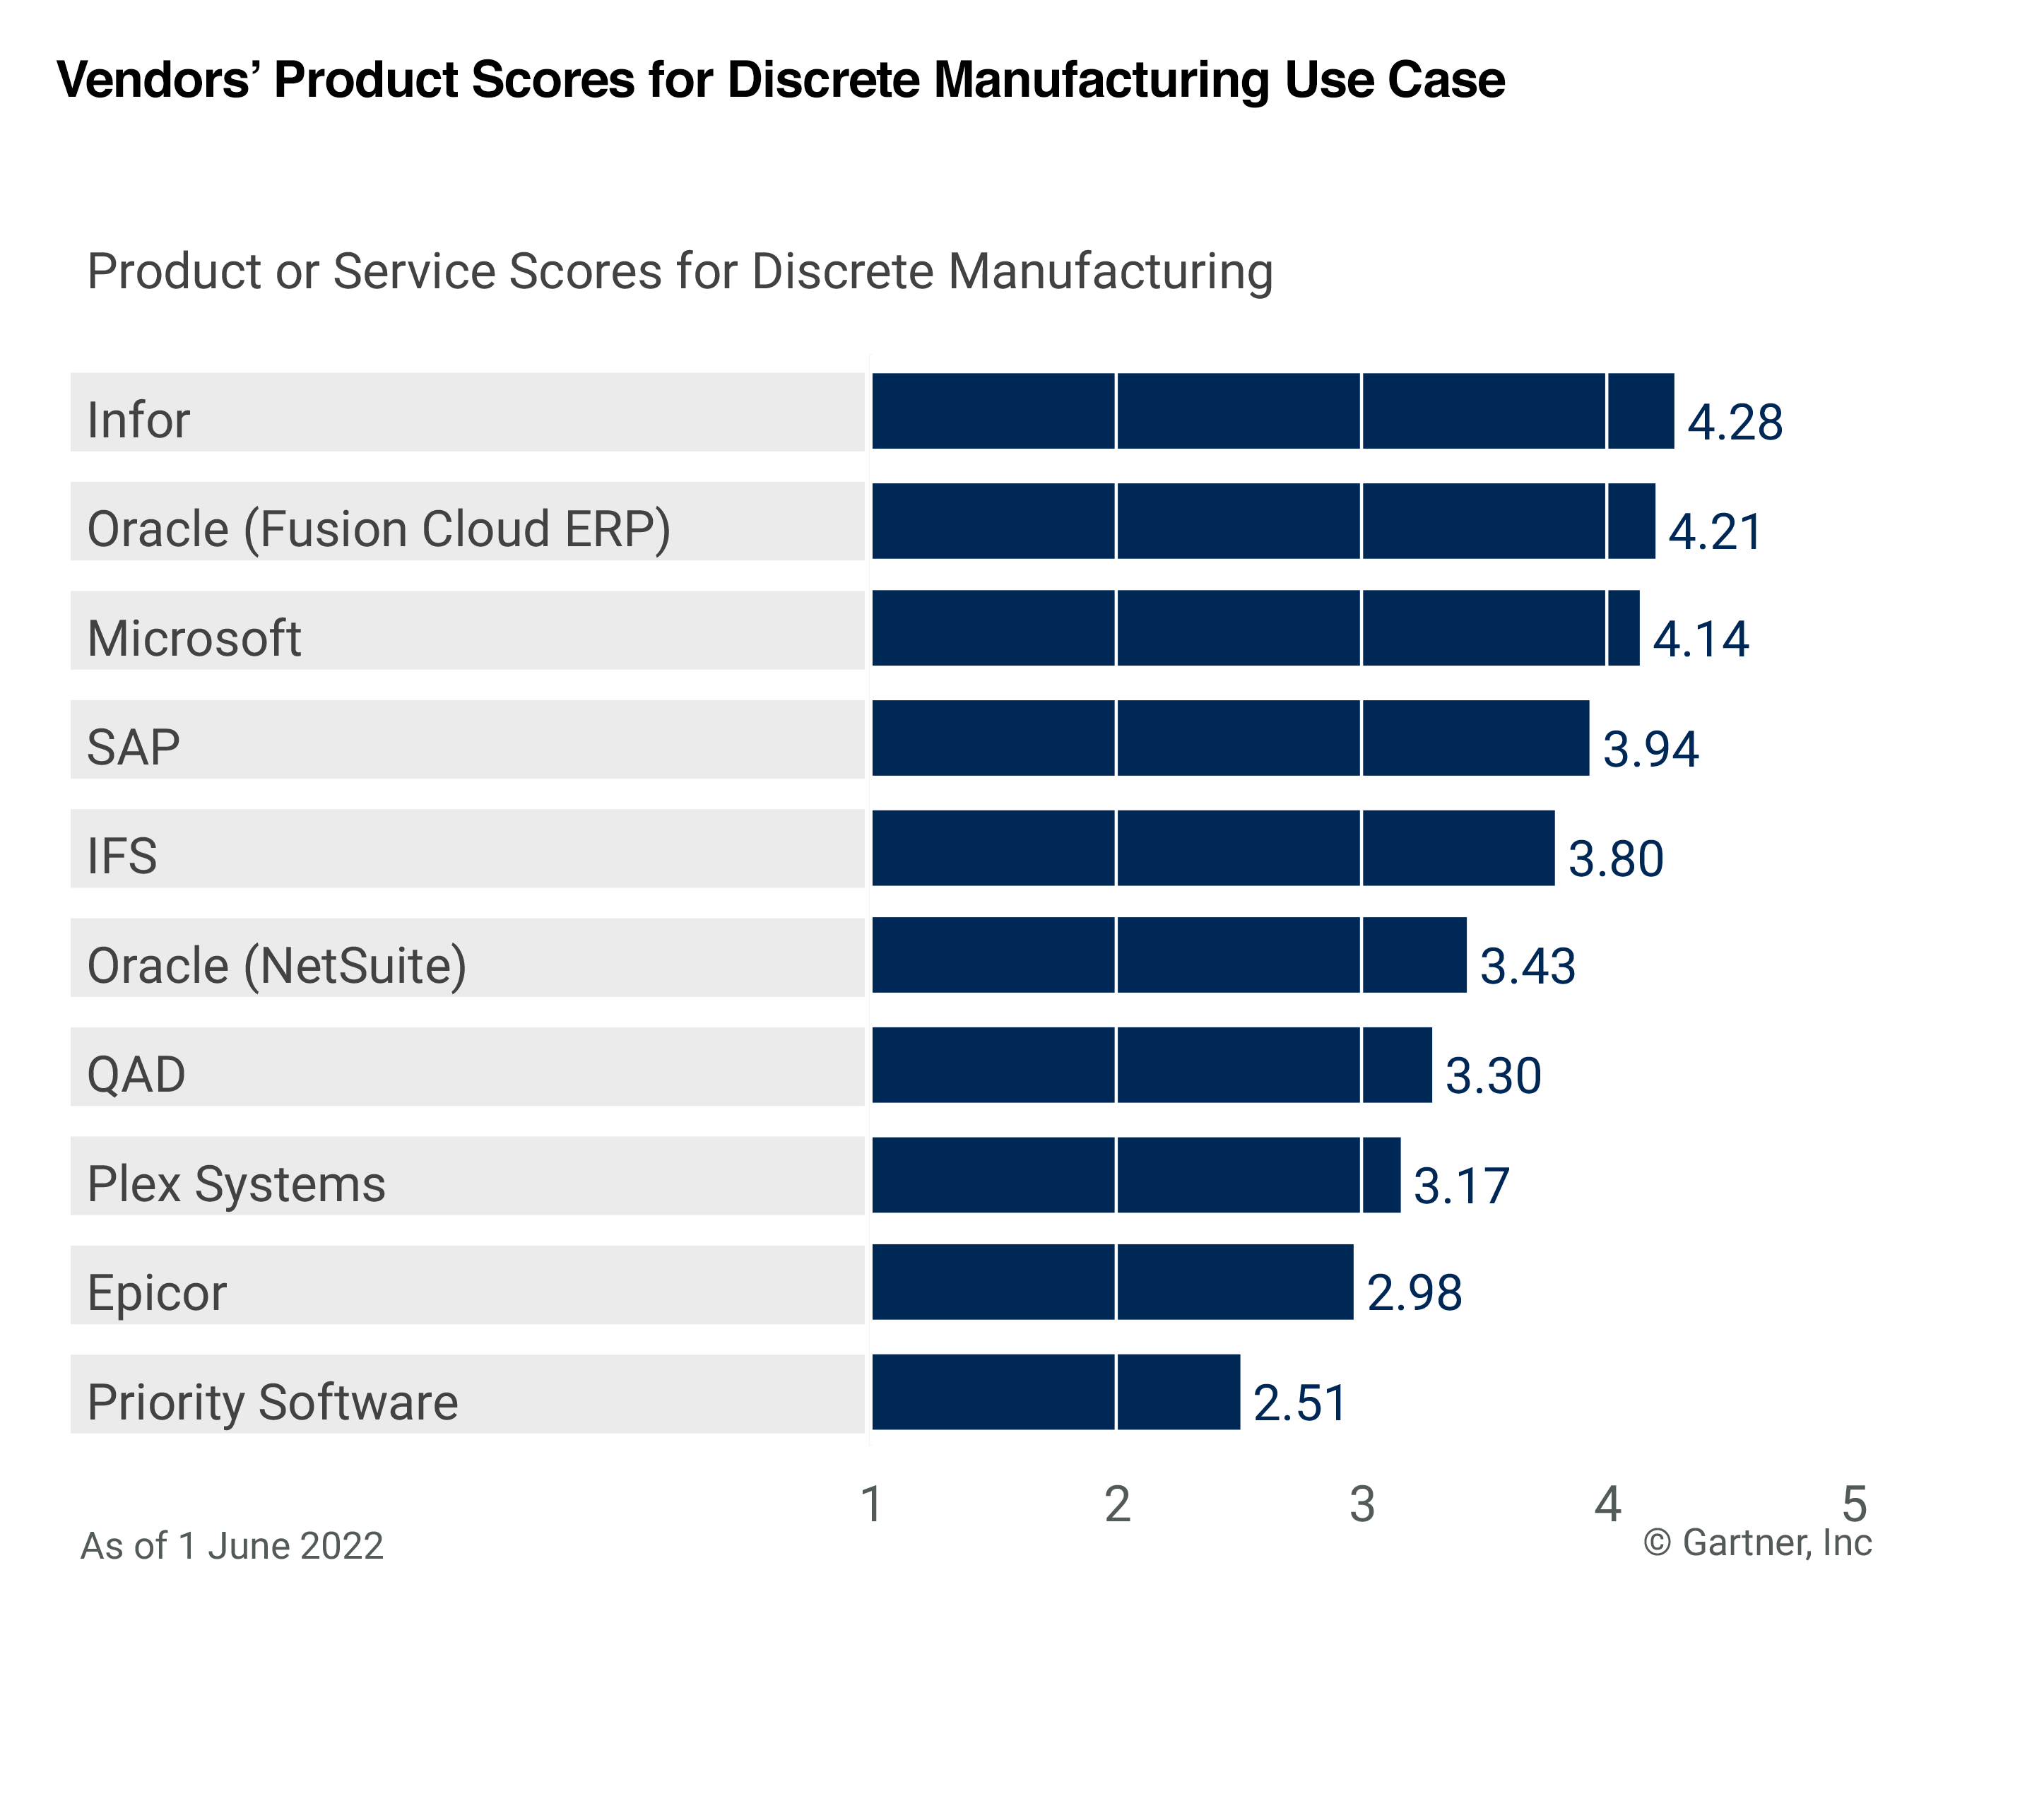 Vendors' product scores for discrete manufacturing use case